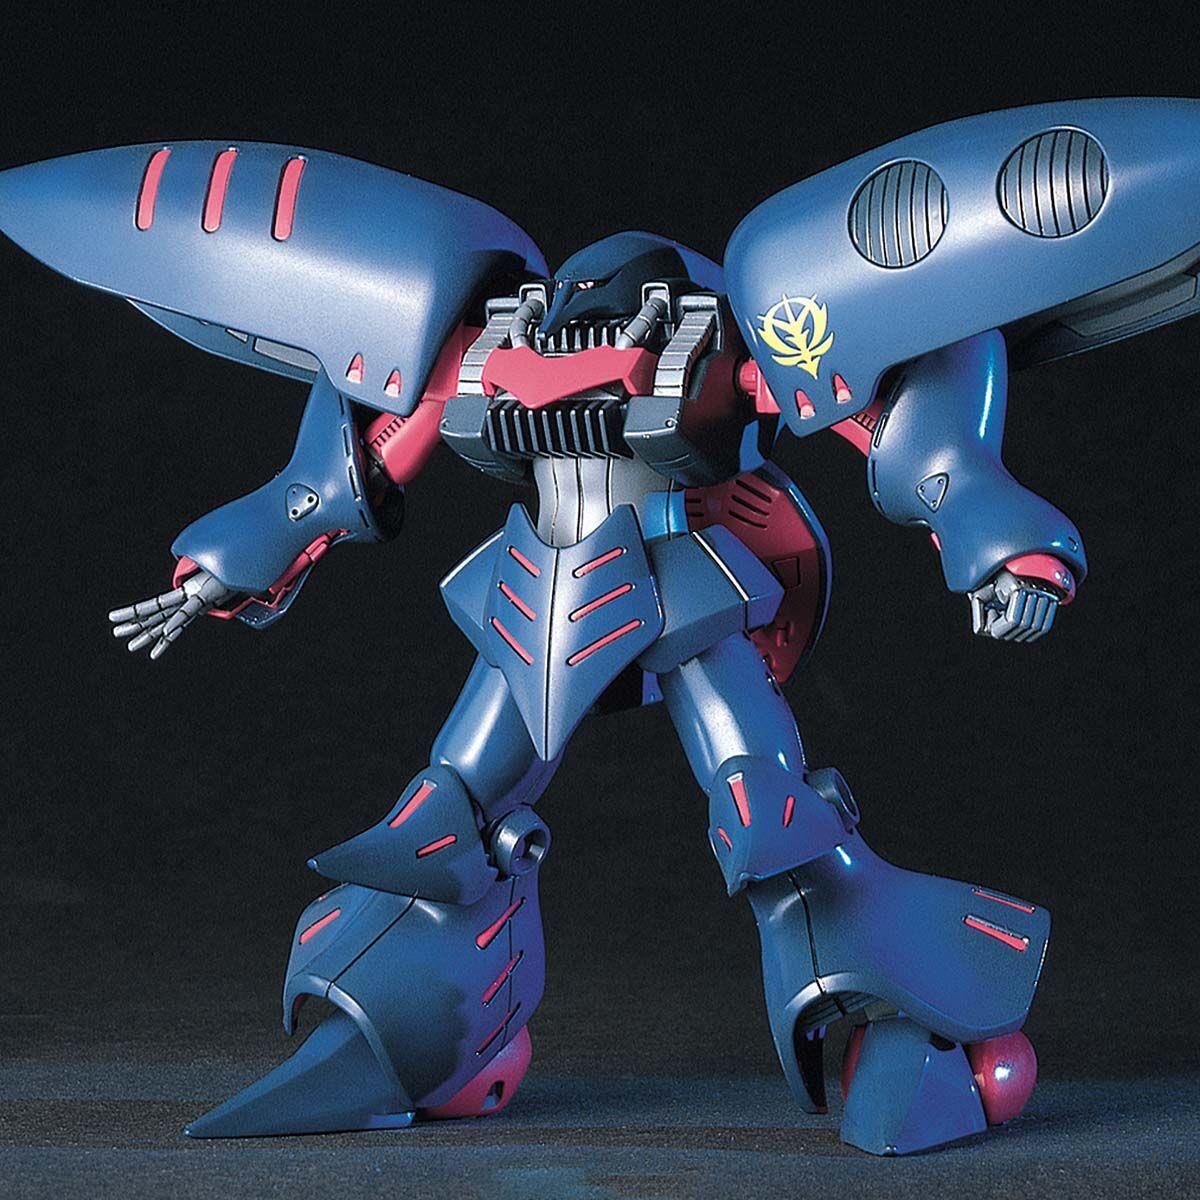 Gundam: Qubeley Mk-II HG Model